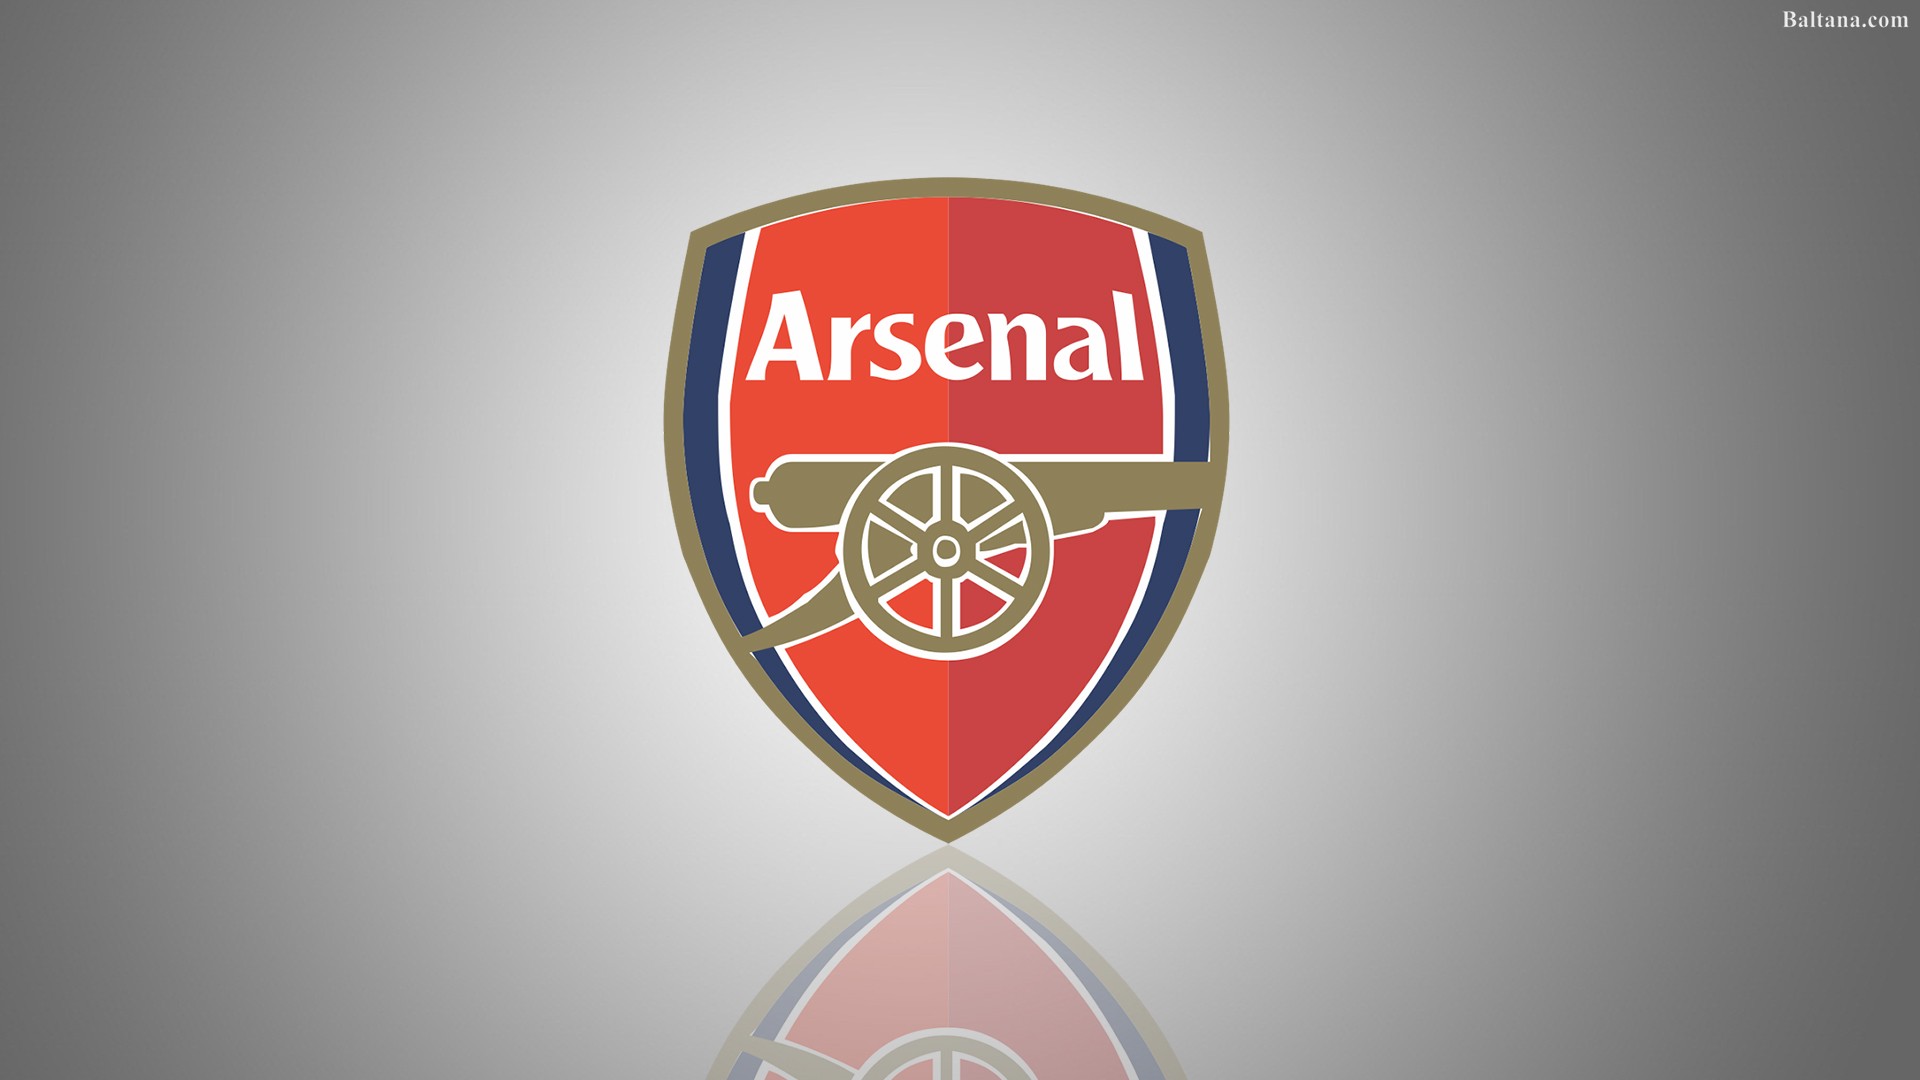 Arsenal F.C Wallpaper 33882 - Baltana